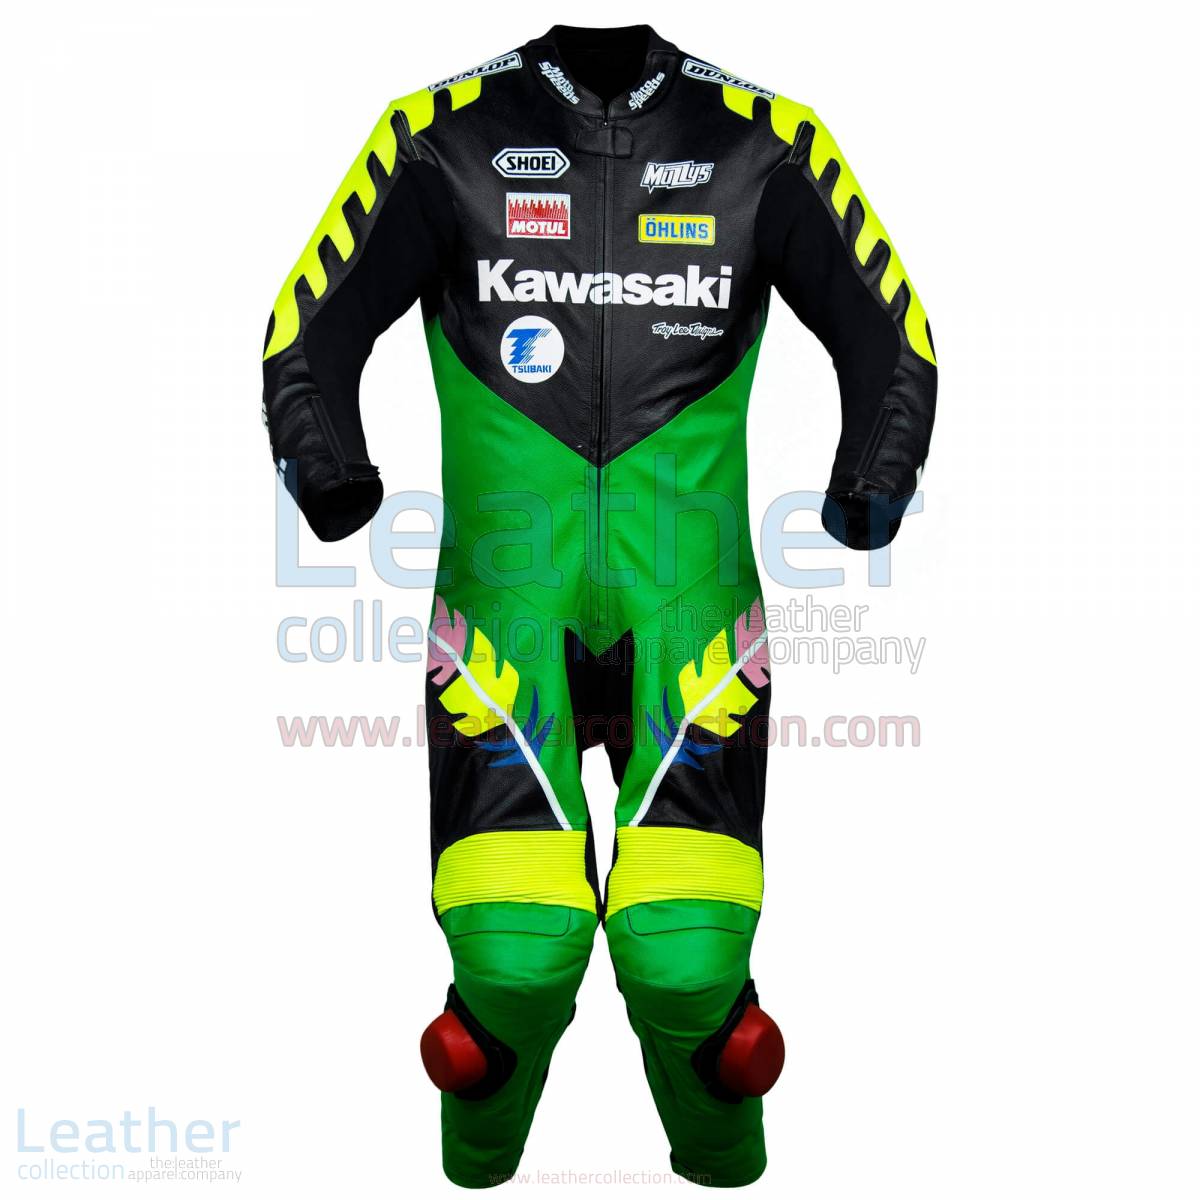 Scott Russell Kawasaki GP 1993 Leather Suit